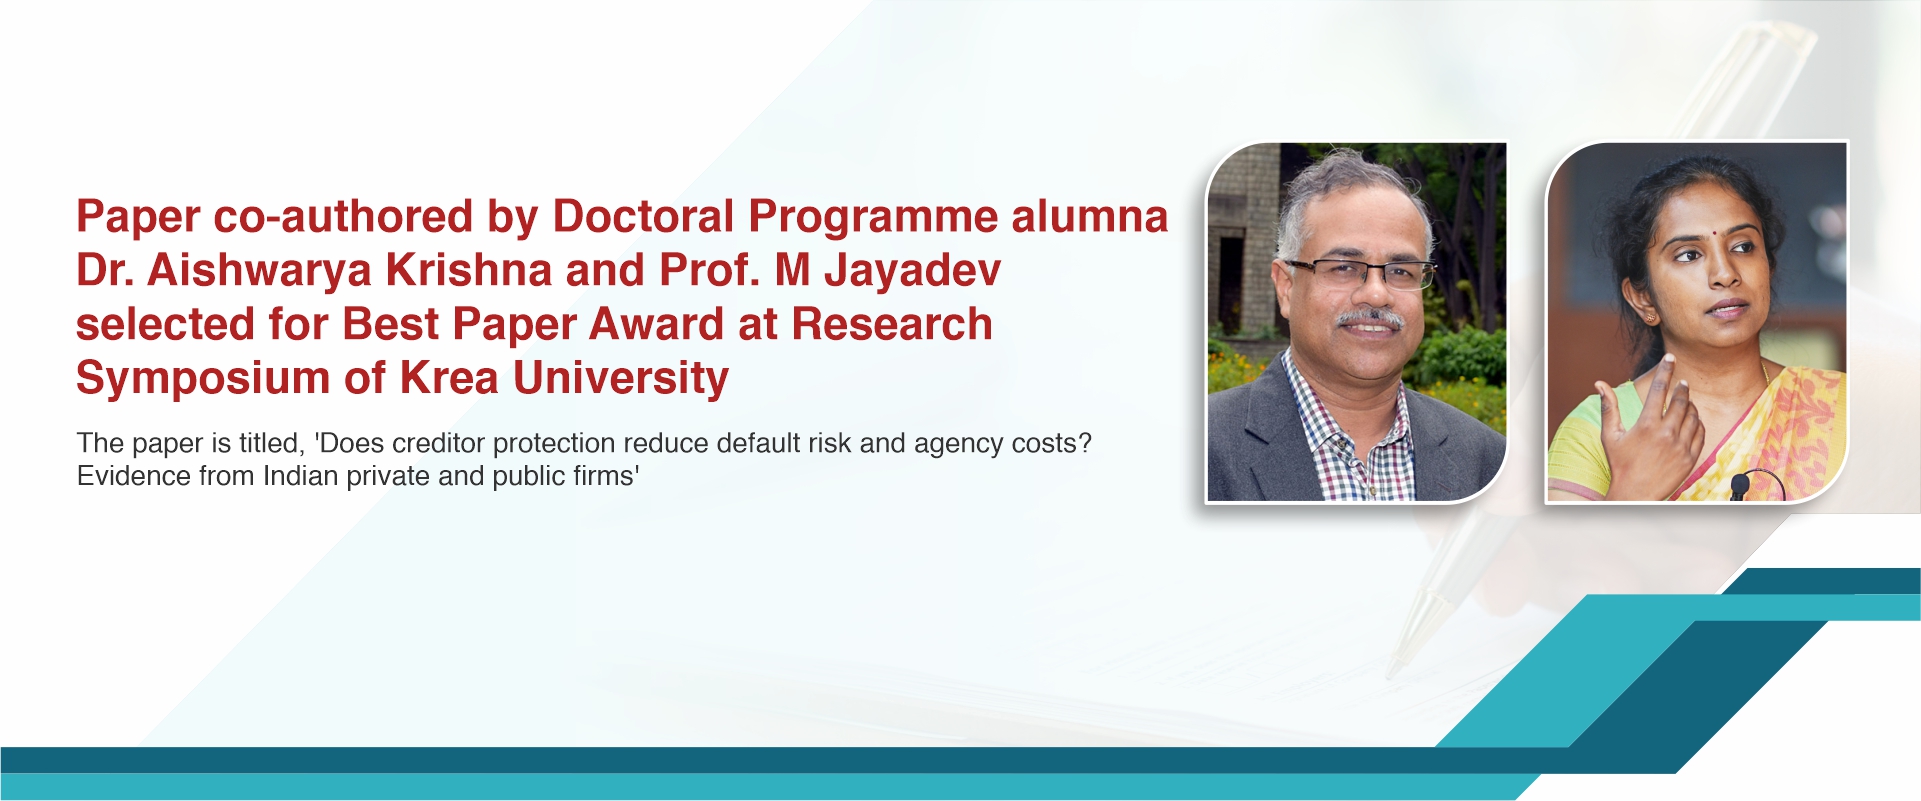 PhD Programme alumna Dr. Aishwarya Krishna and Prof. M Jayadev selected for Best Paper Award at Research Symposium on Finance and Economics at Krea University